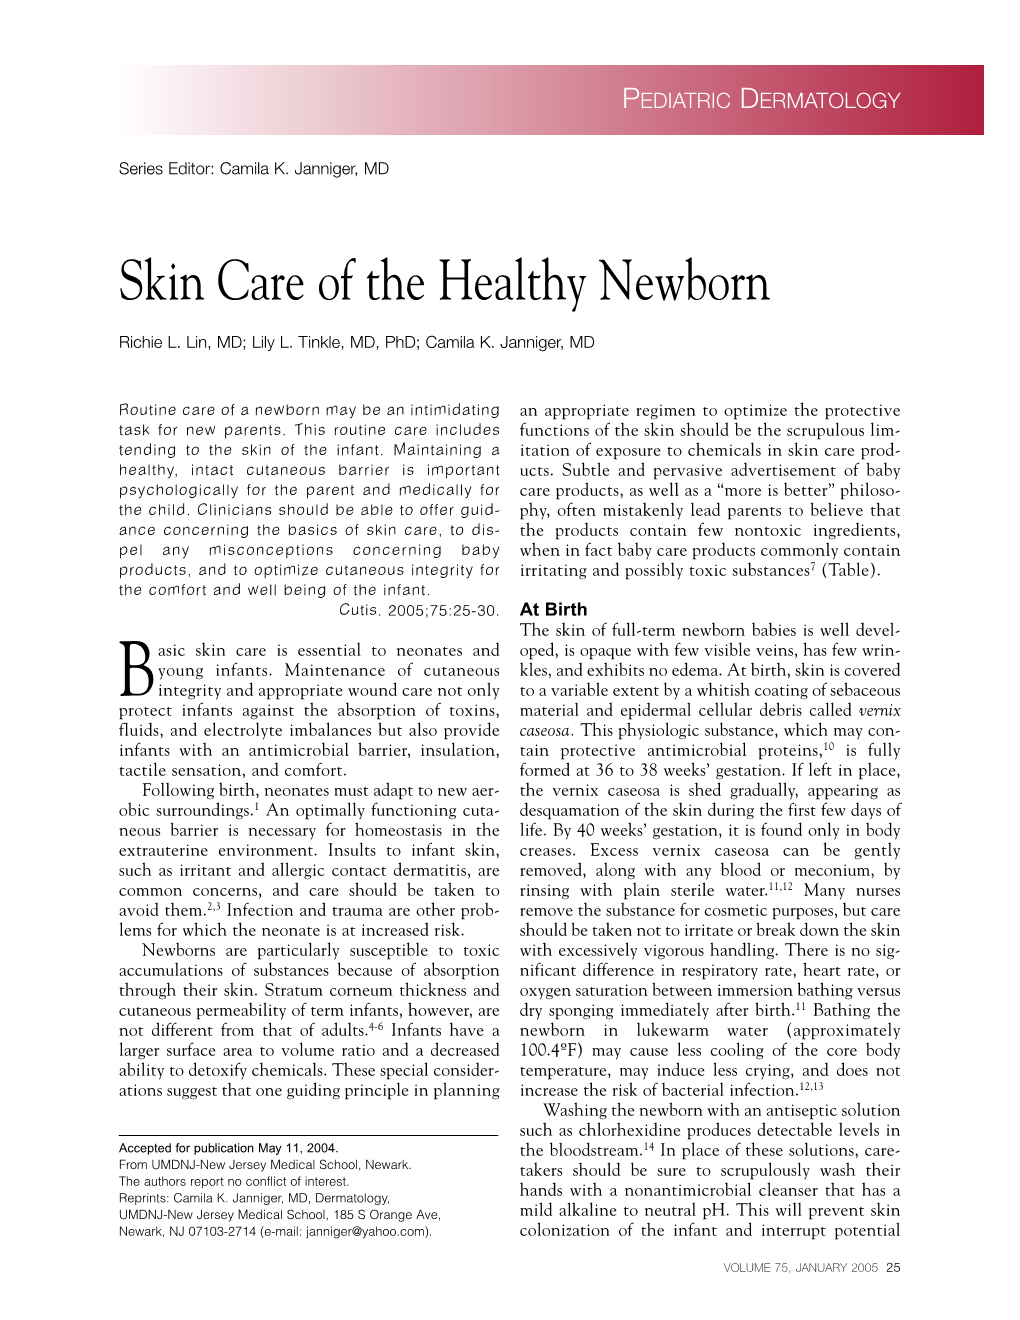 Skin Care of the Healthy Newborn